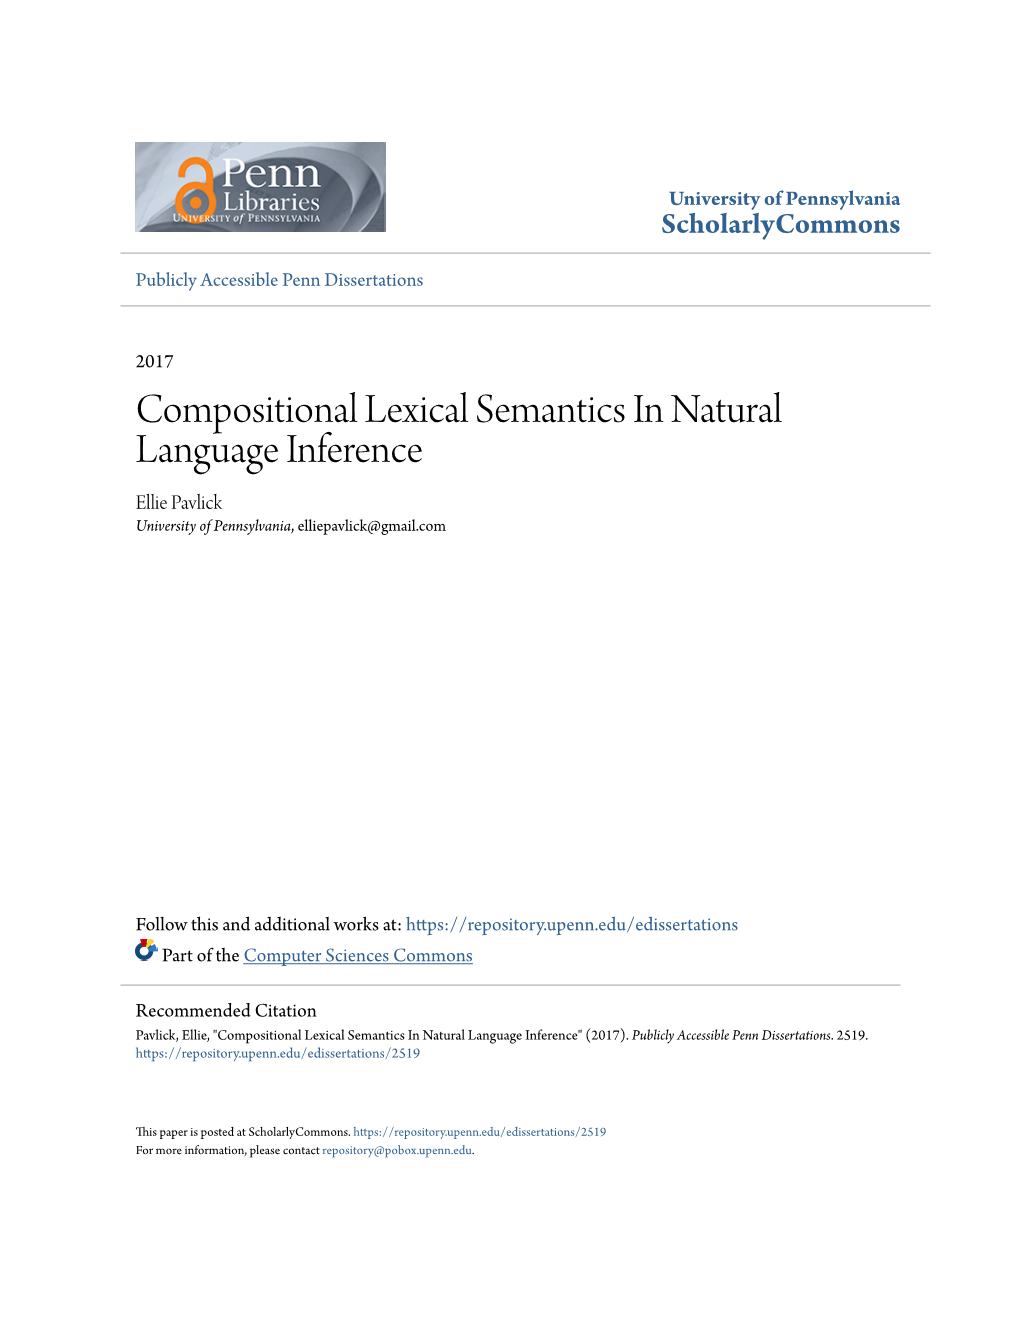 Compositional Lexical Semantics in Natural Language Inference Ellie Pavlick University of Pennsylvania, Elliepavlick@Gmail.Com